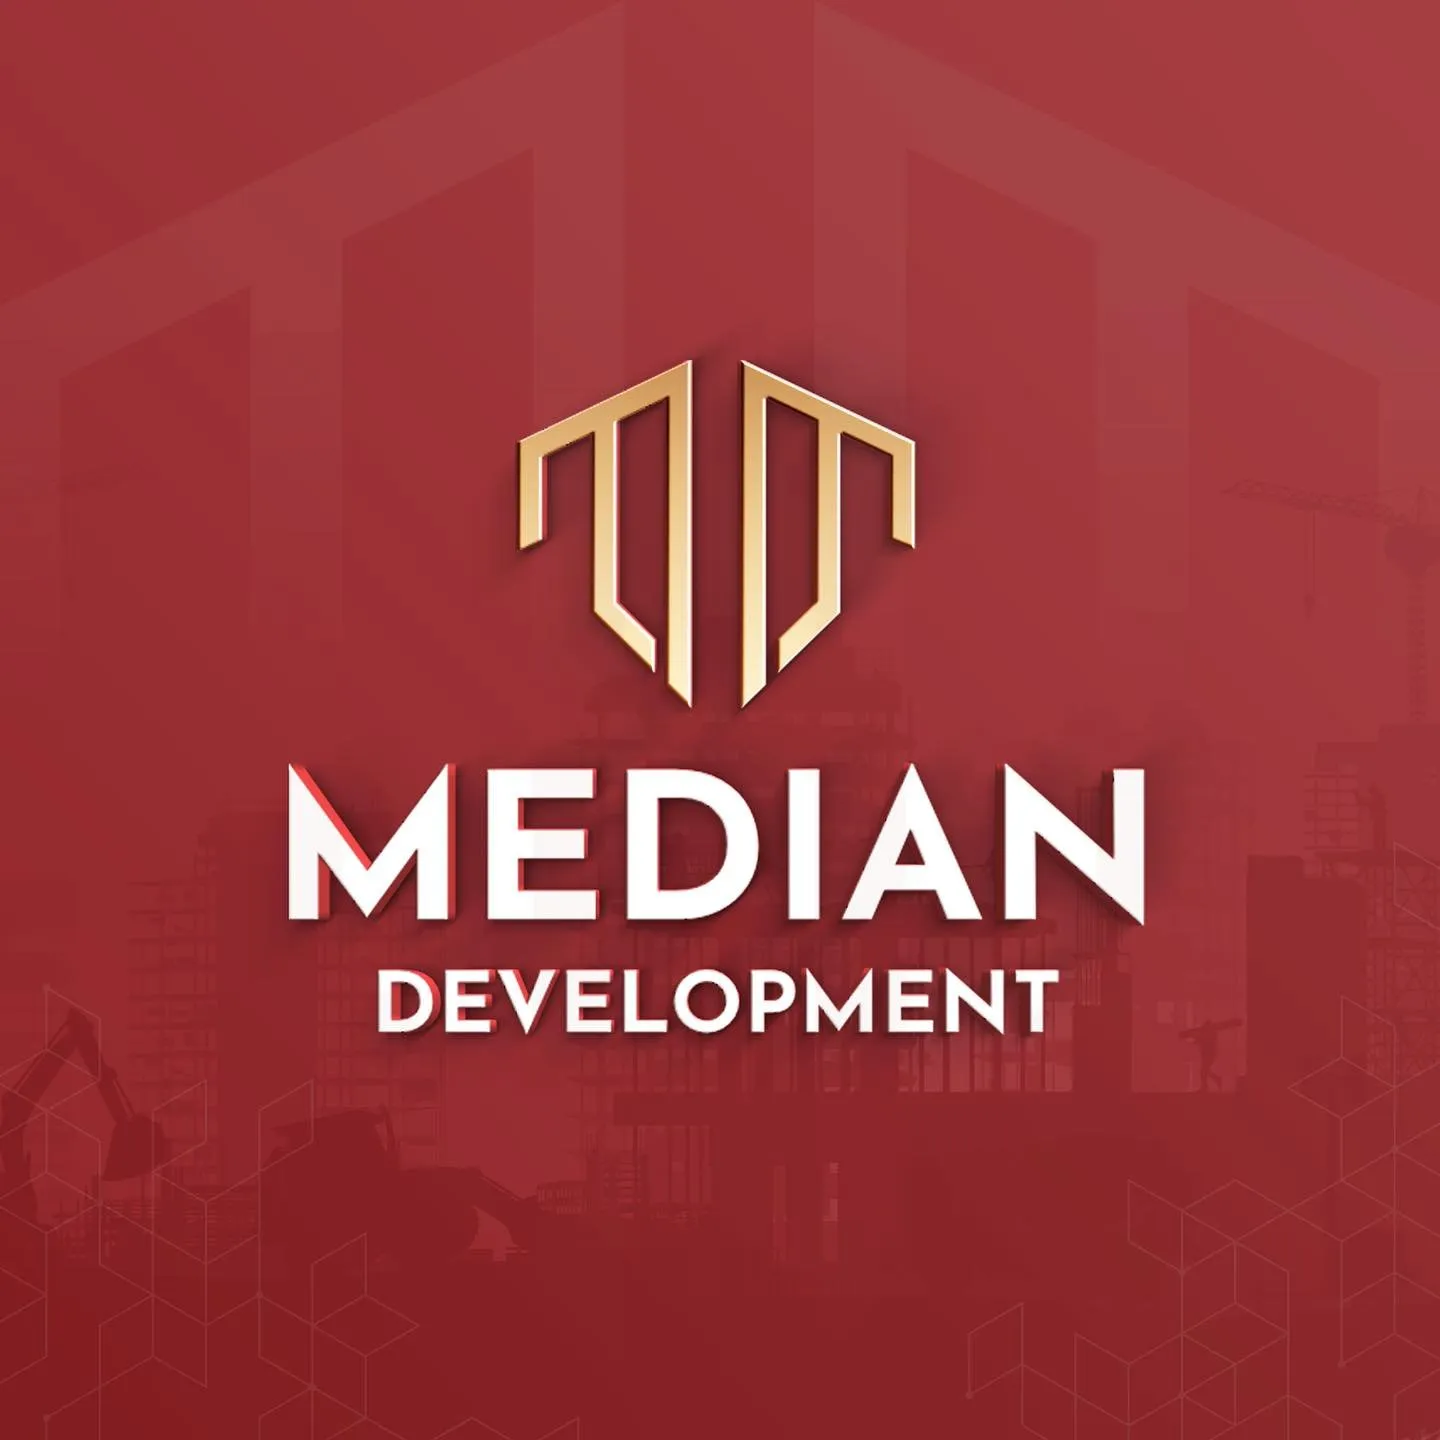 Median Development